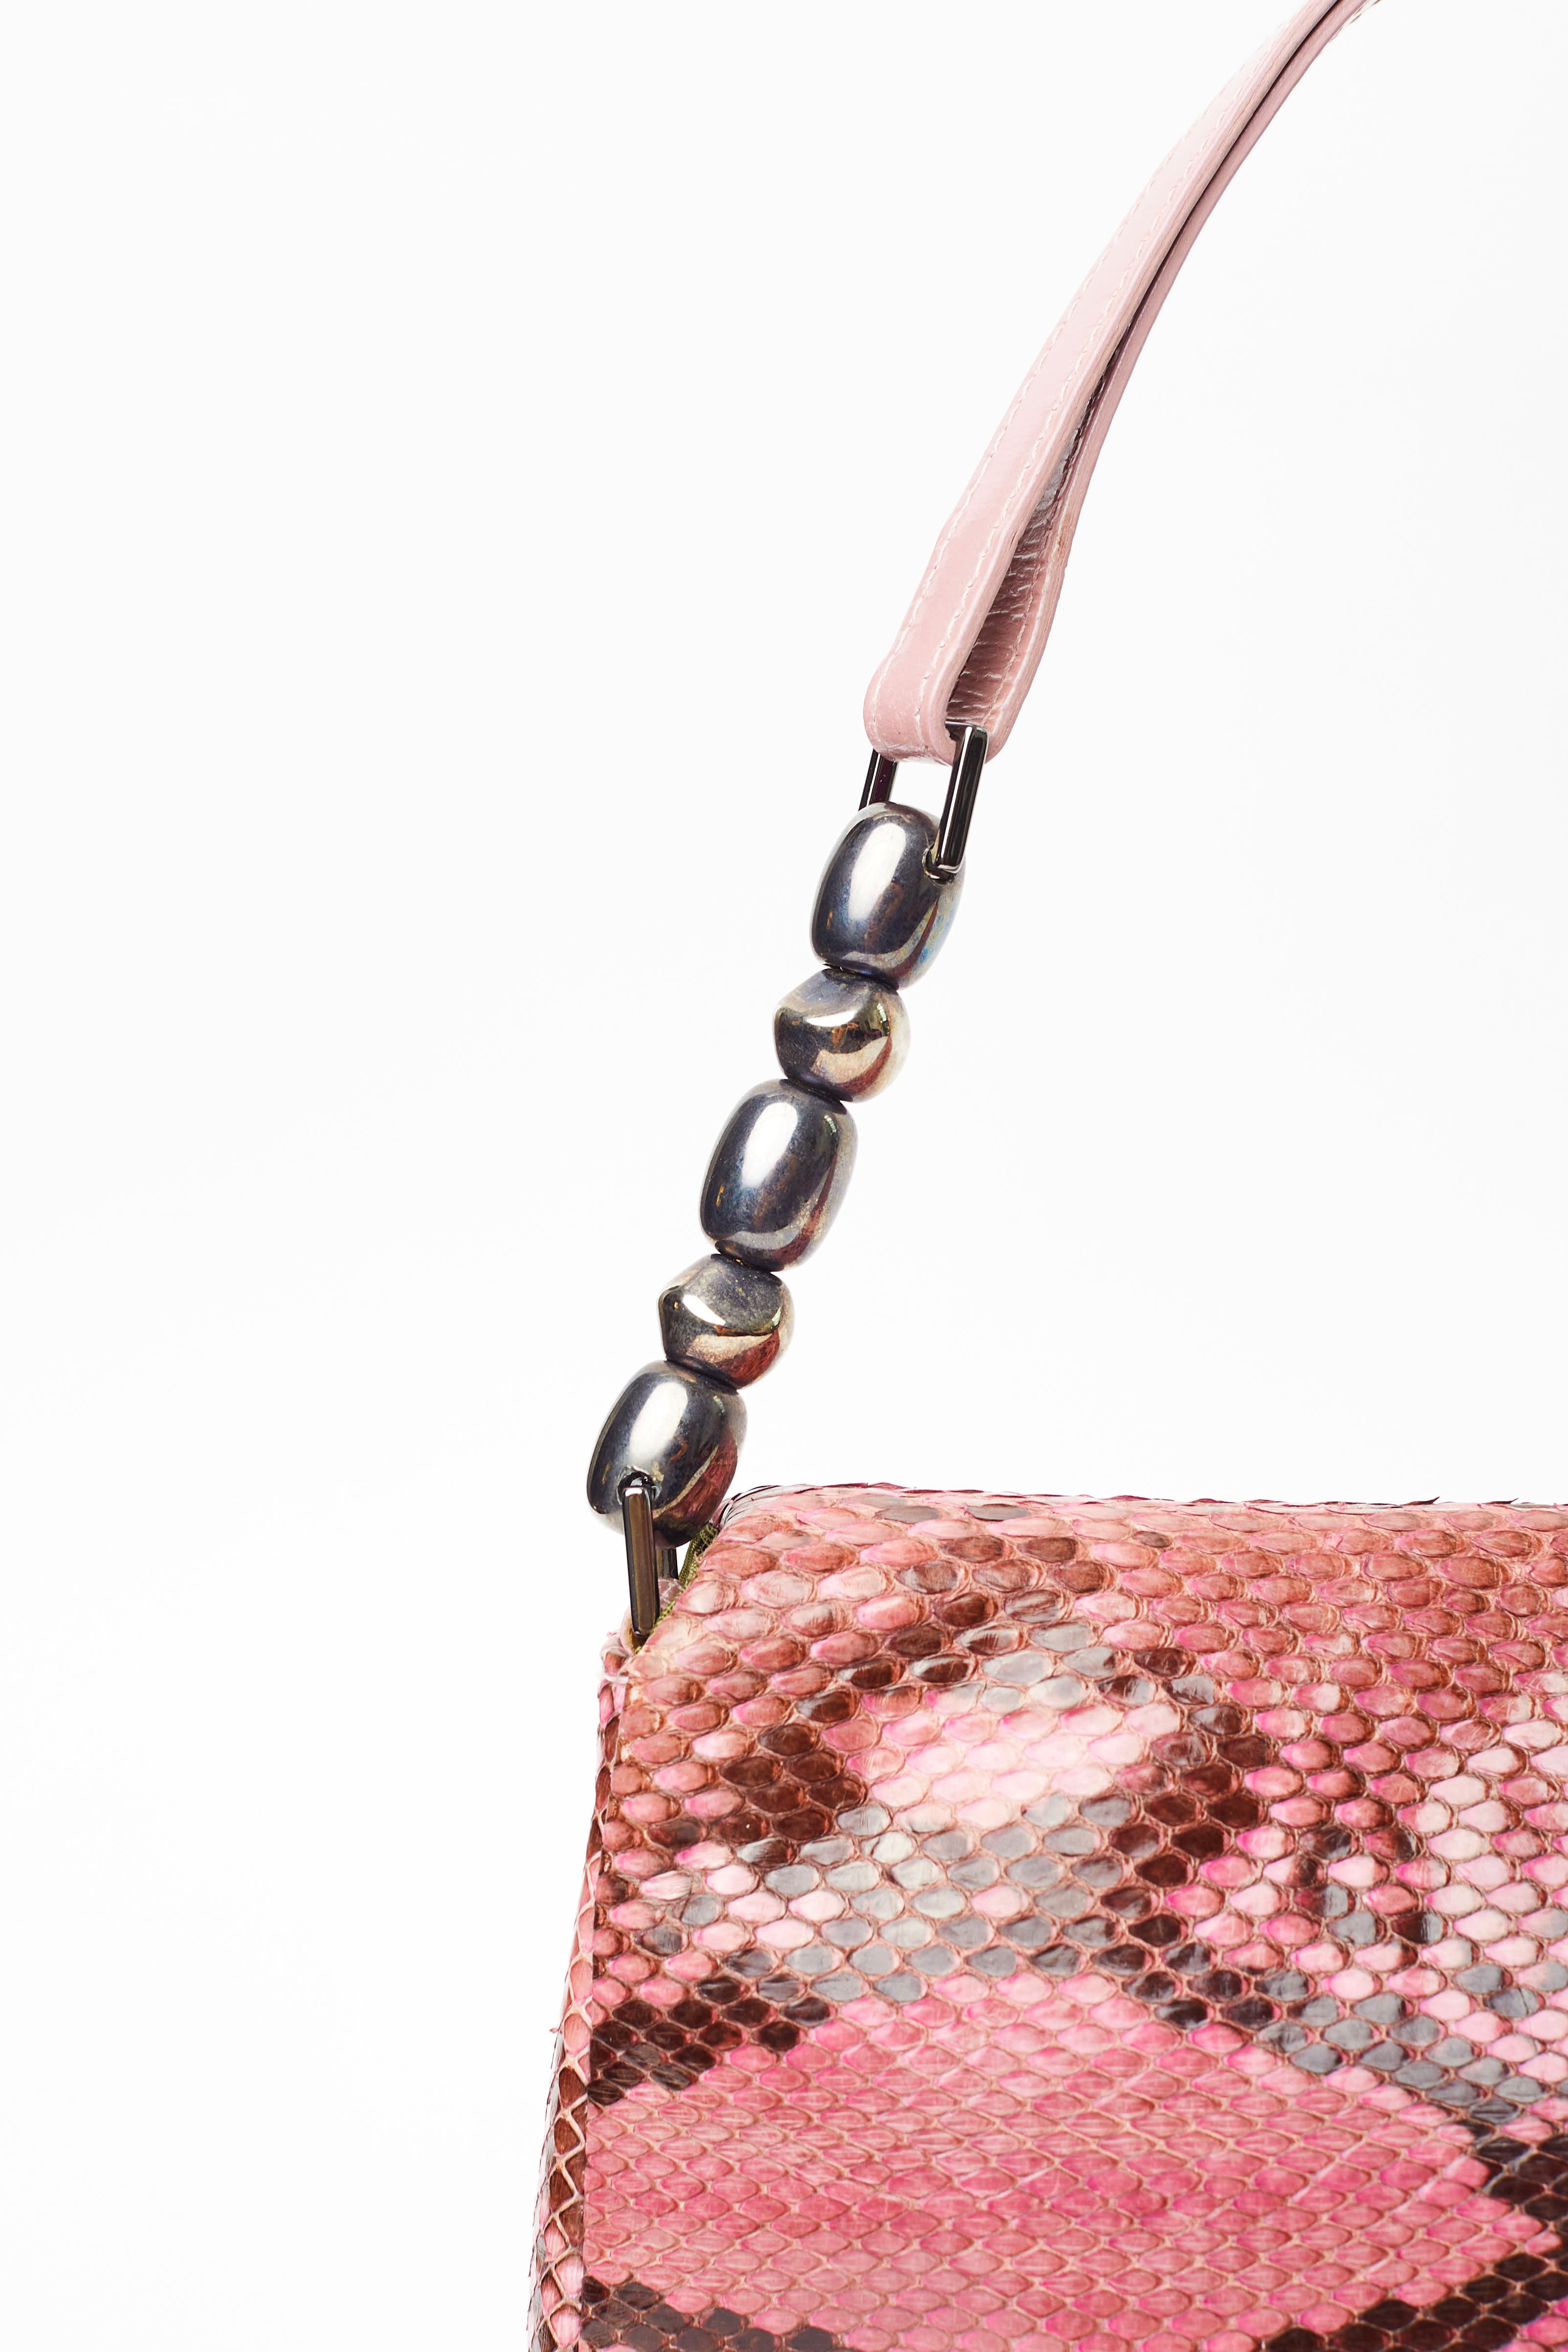 Christian Dior <br> John Galliano Y2K pink snakeskin Malice bag